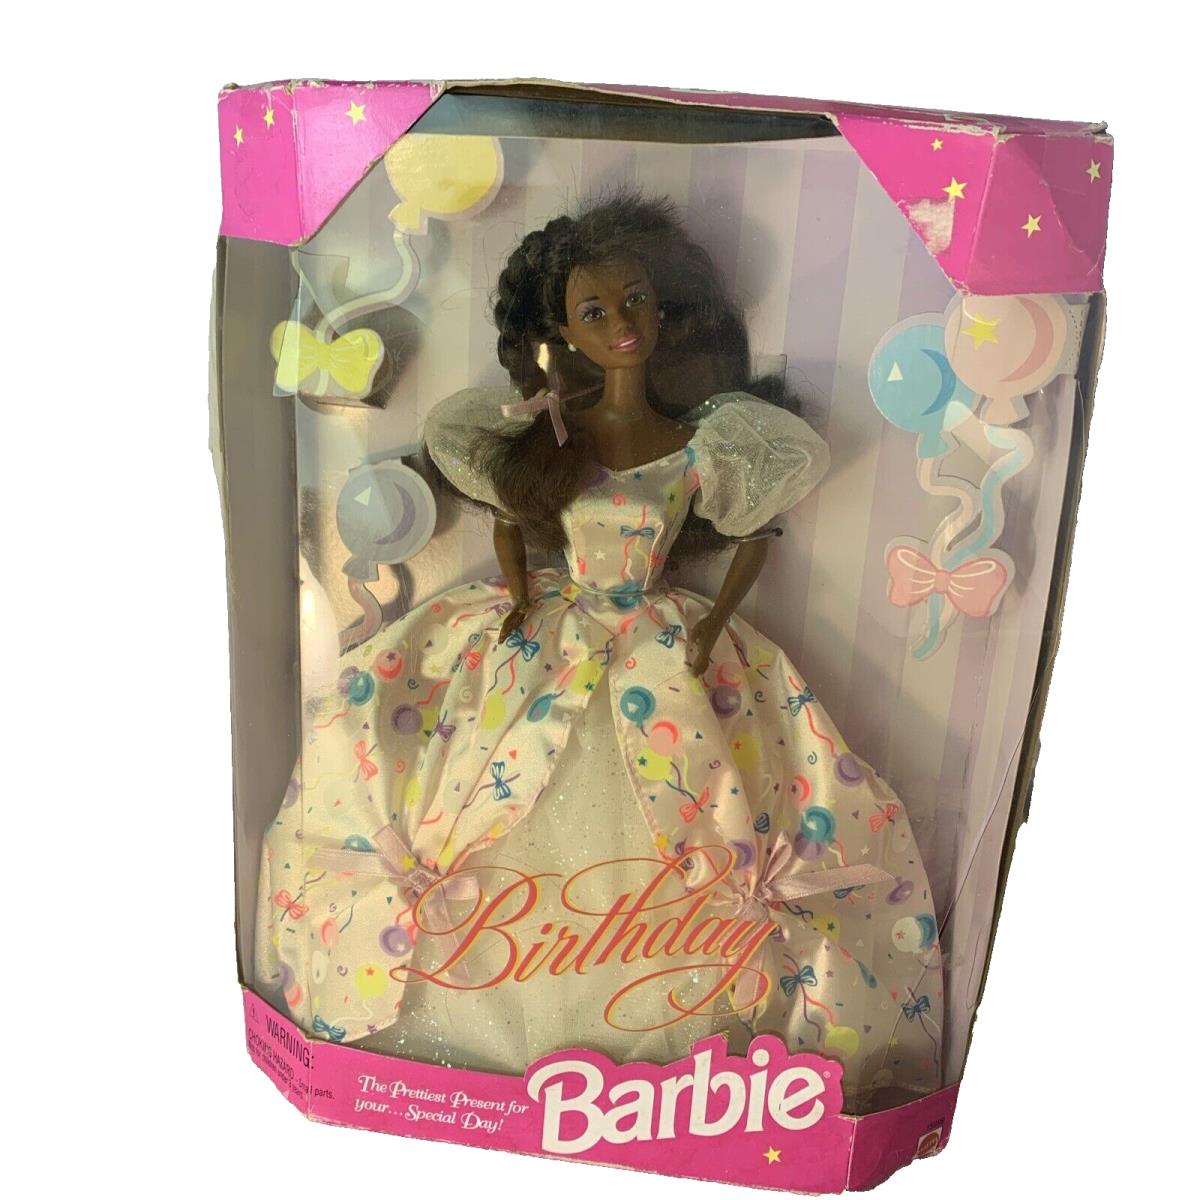 1996 Mattel Birthday Barbie Doll 15998 - In The Box Vintage